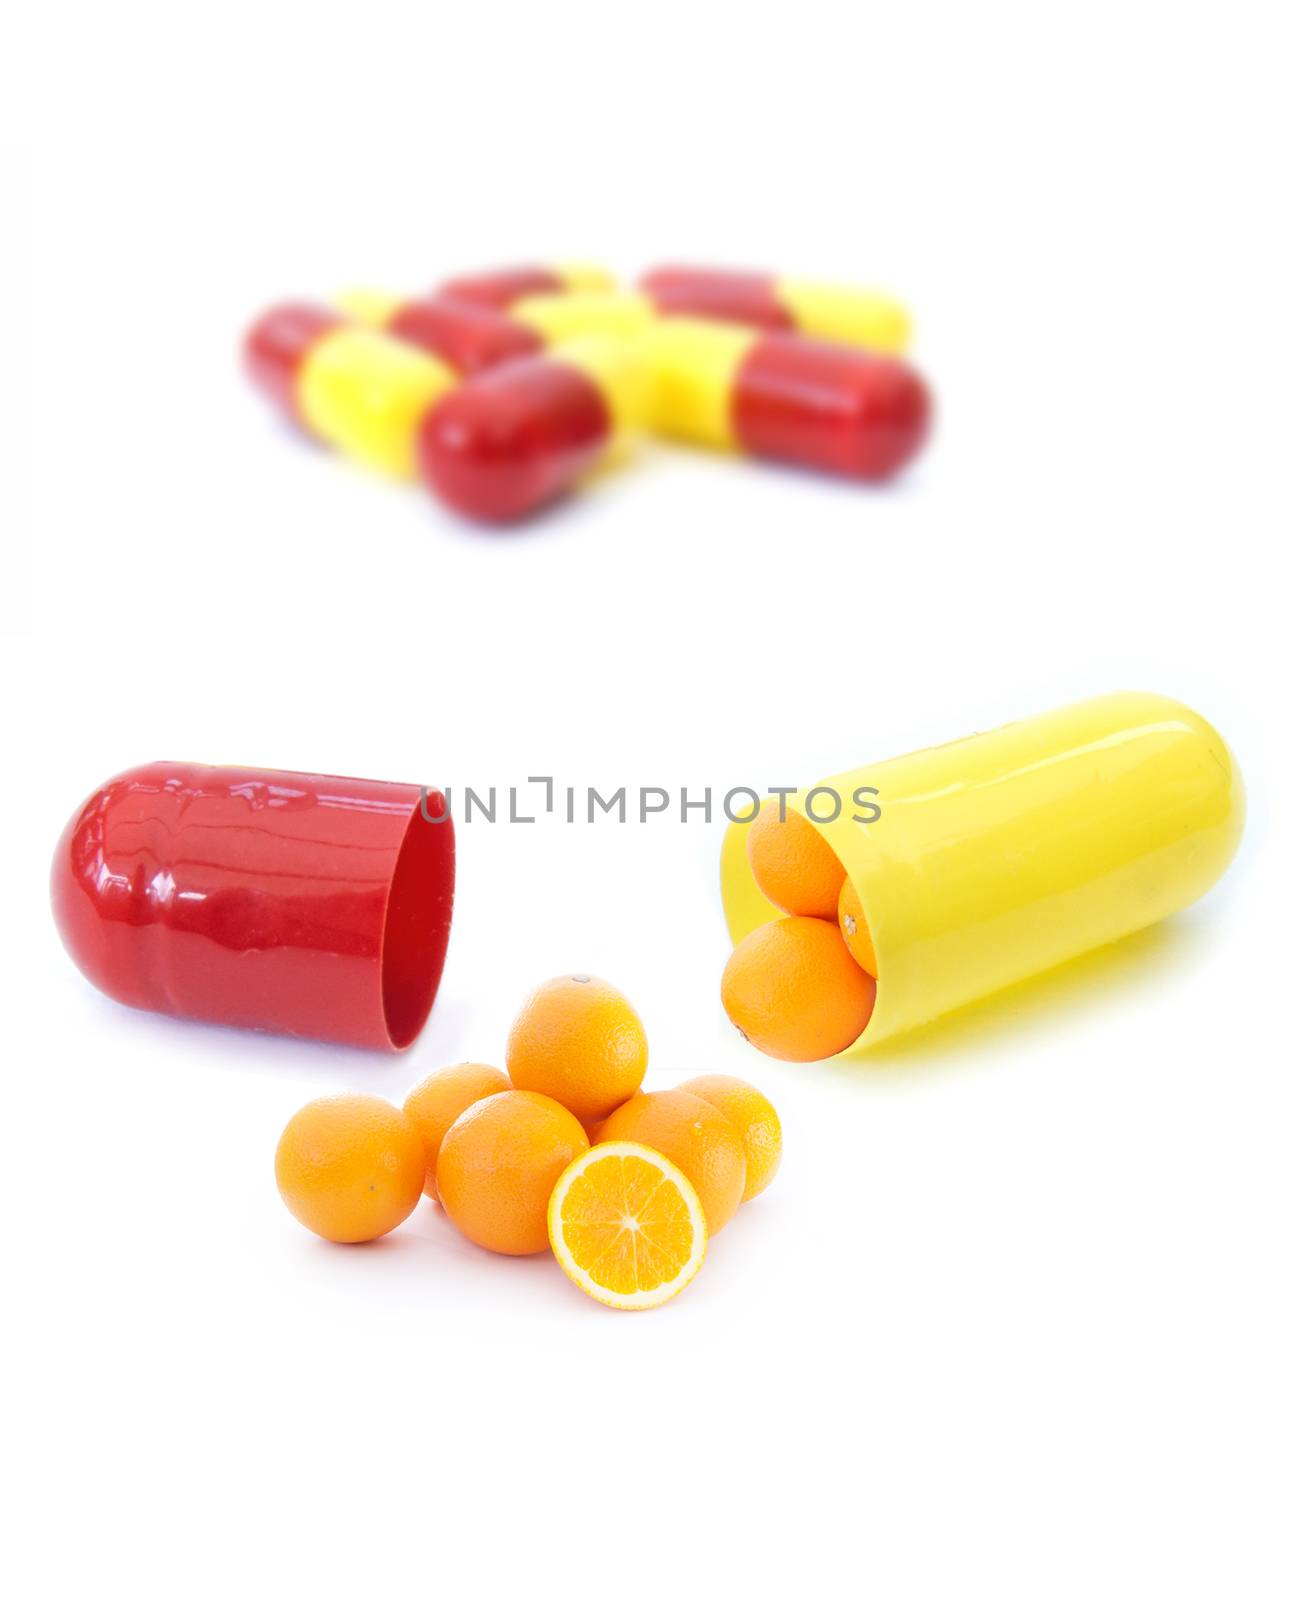 Miniature oranges inside a vitamin pill capsule 